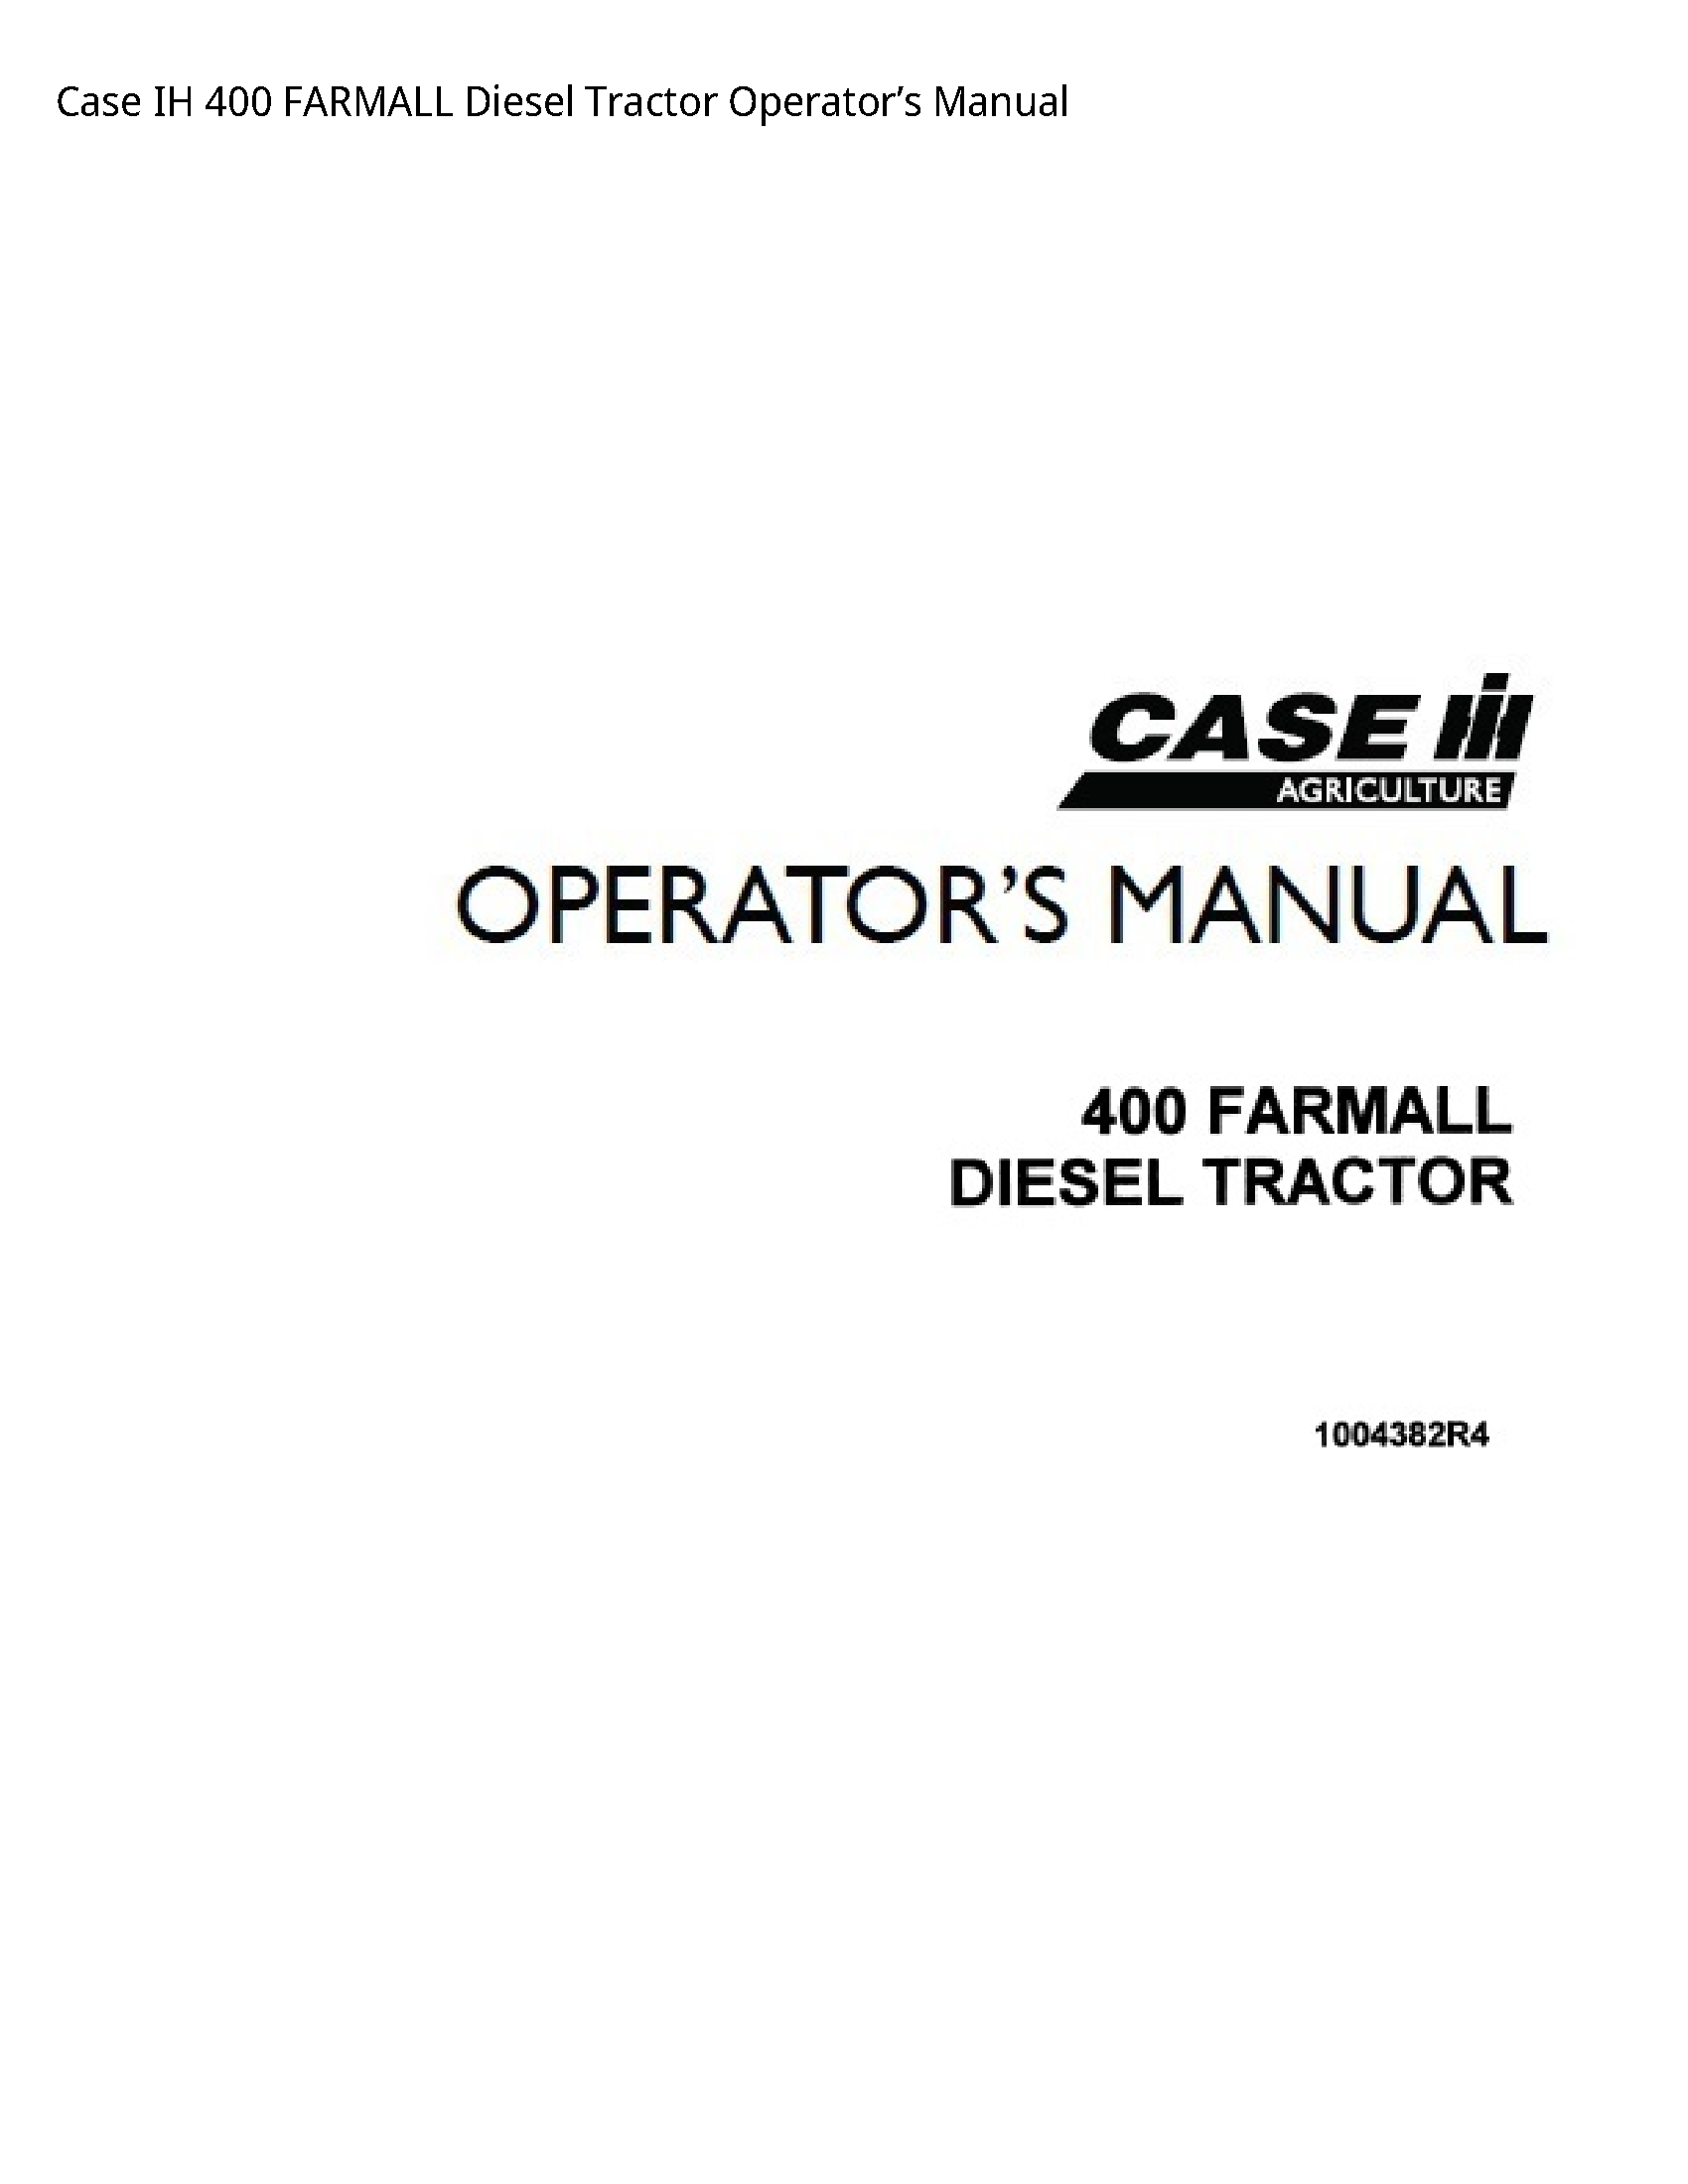 Case/Case IH 400 IH FARMALL Diesel Tractor Operator’s manual